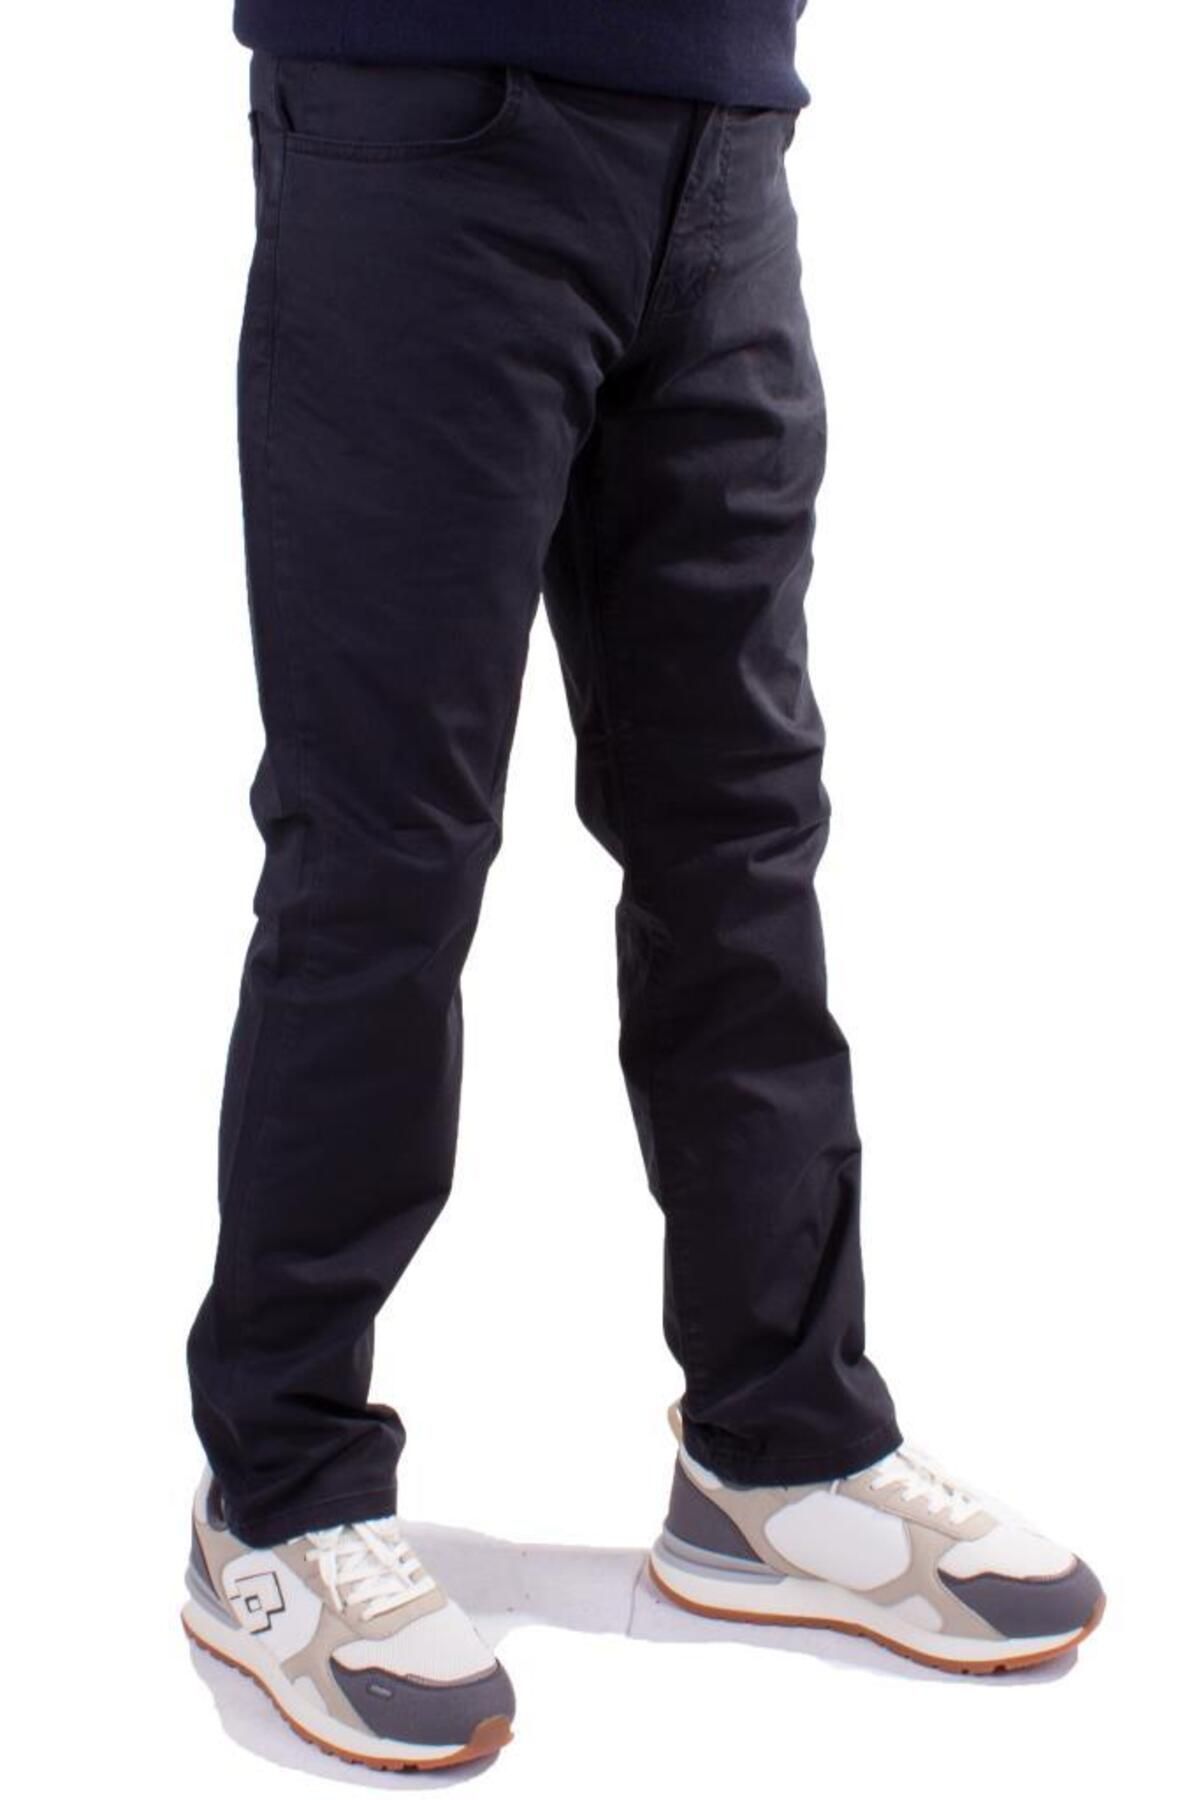 Twister Jeans Twister Vegas 738 Siyah Yüksek Bel Rahat Paça Erkek Kanvas Pantolon